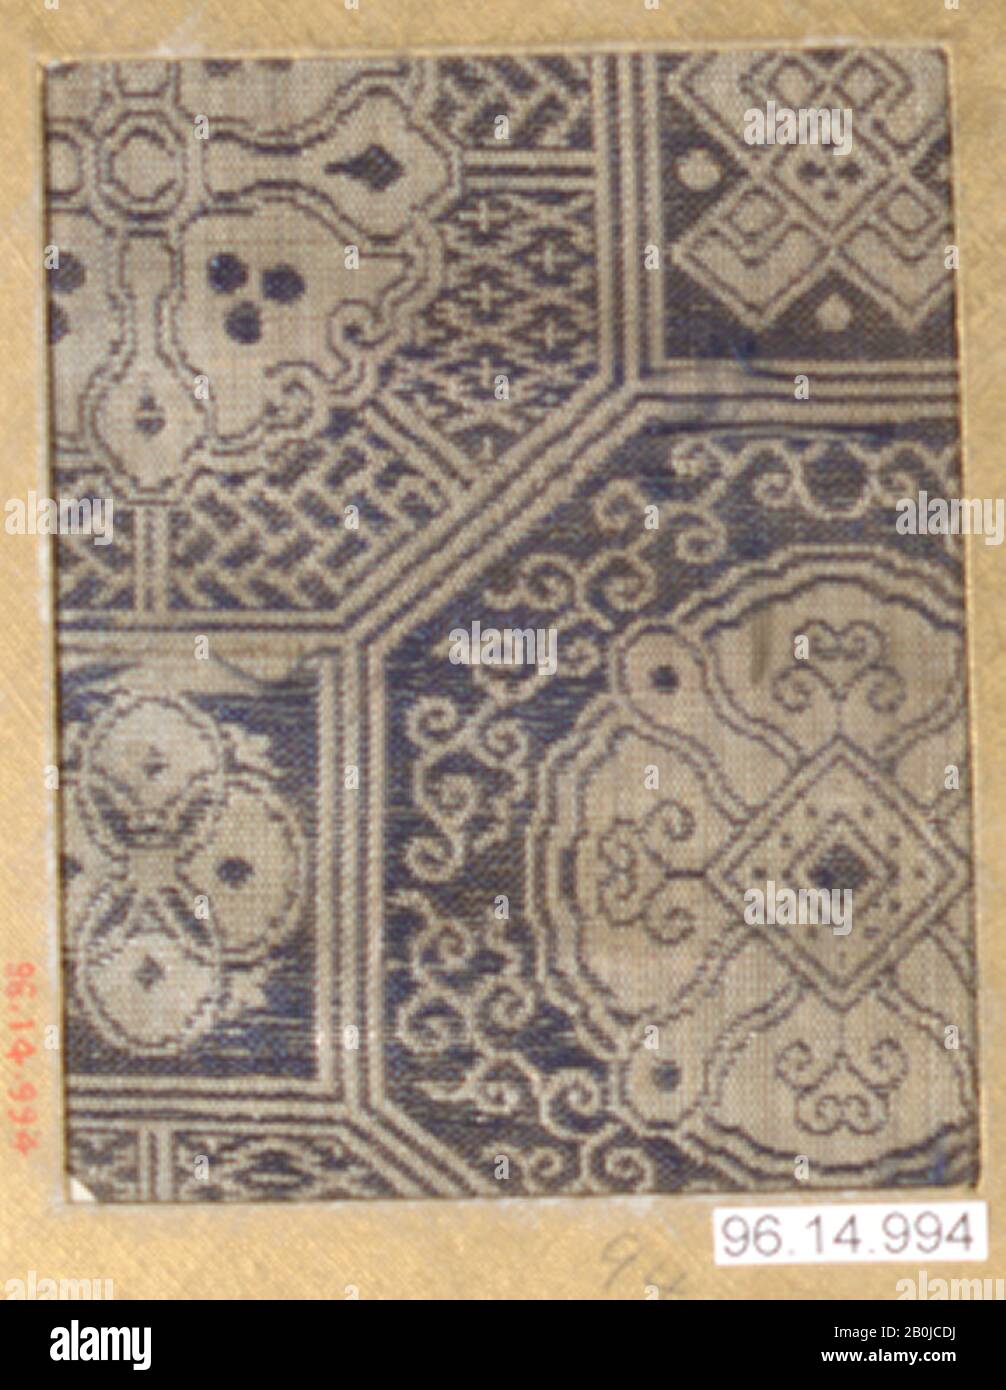 Piece, Japan, 18th–19th century, Japan, Silk, 3 1/4 x 5 in. (8.26 x 12.70 cm), Textiles-Woven Stock Photo